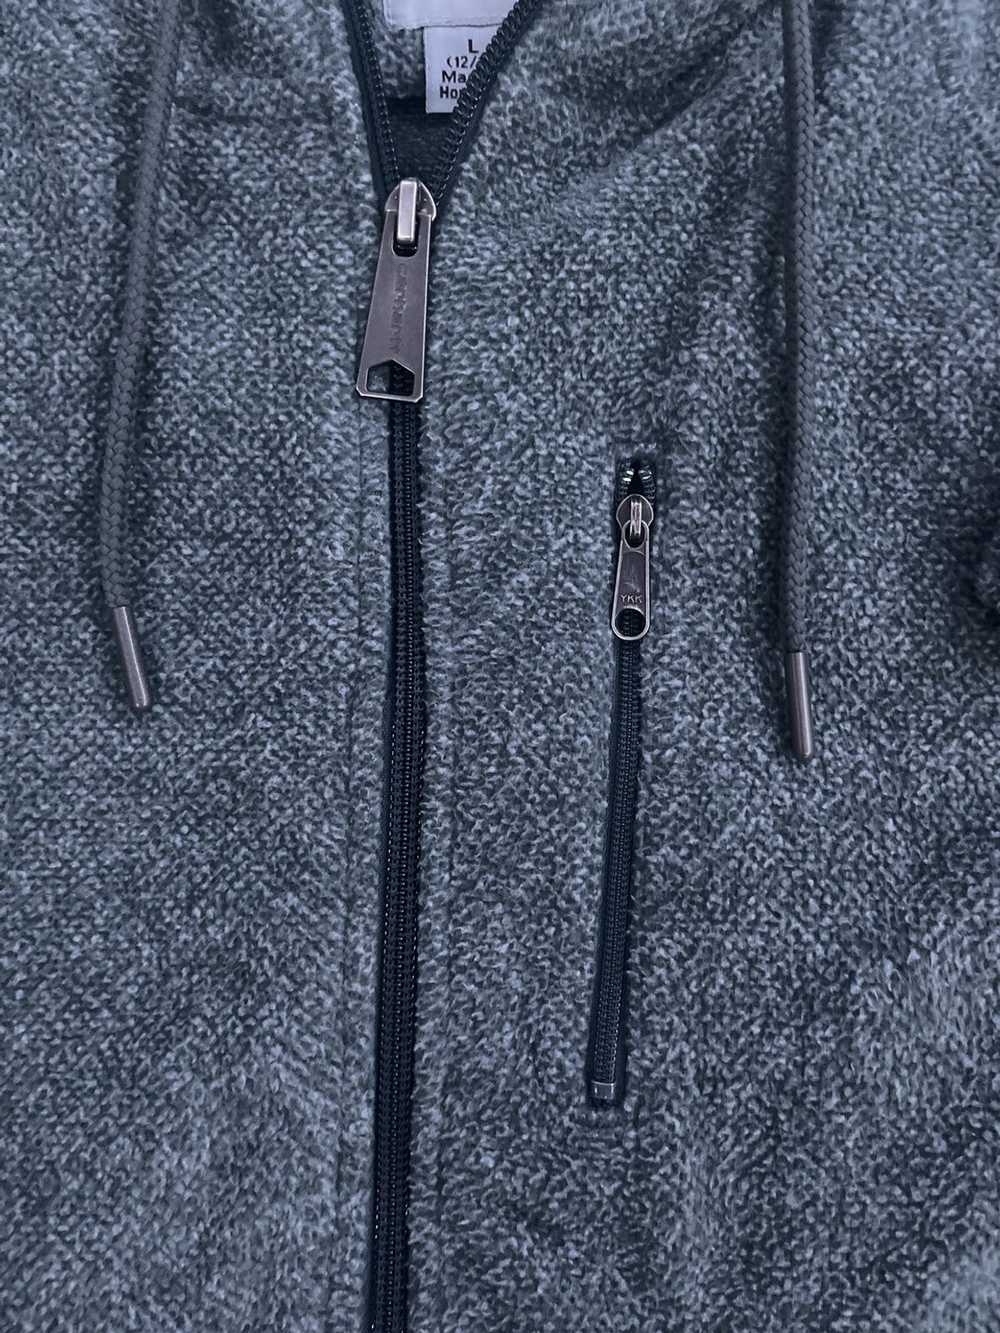 Carhartt Carhartt zip-up hooded jacket - image 3